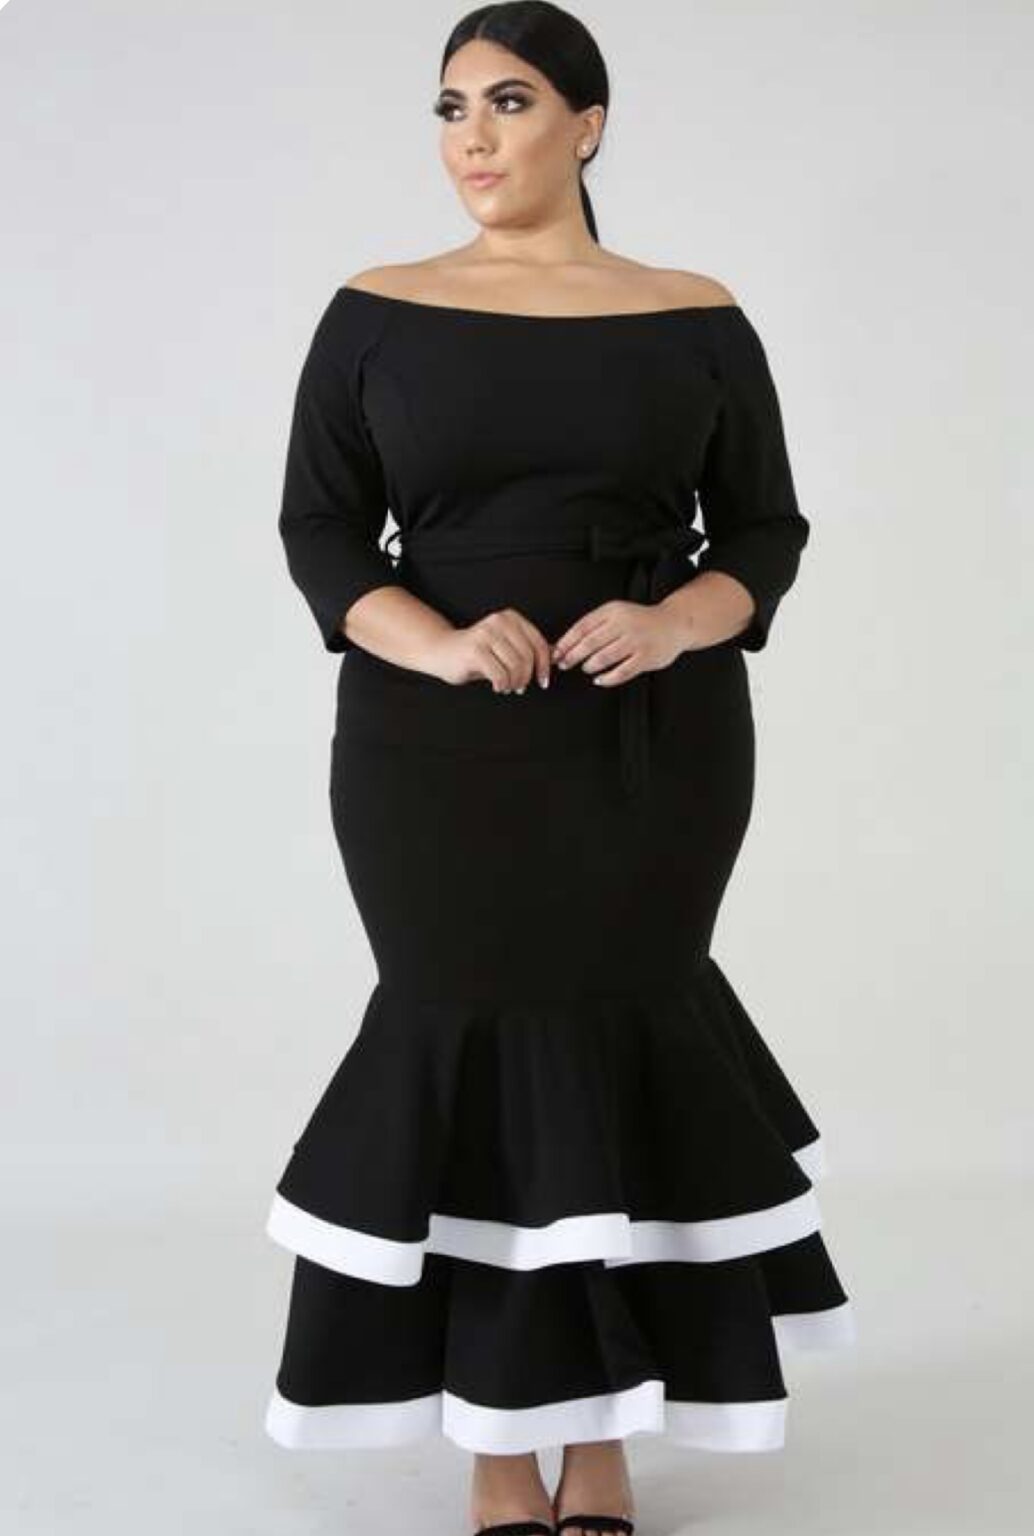 25 Stylish Black & White Plus Size Formal Dresses - Plus Size Women Fashion